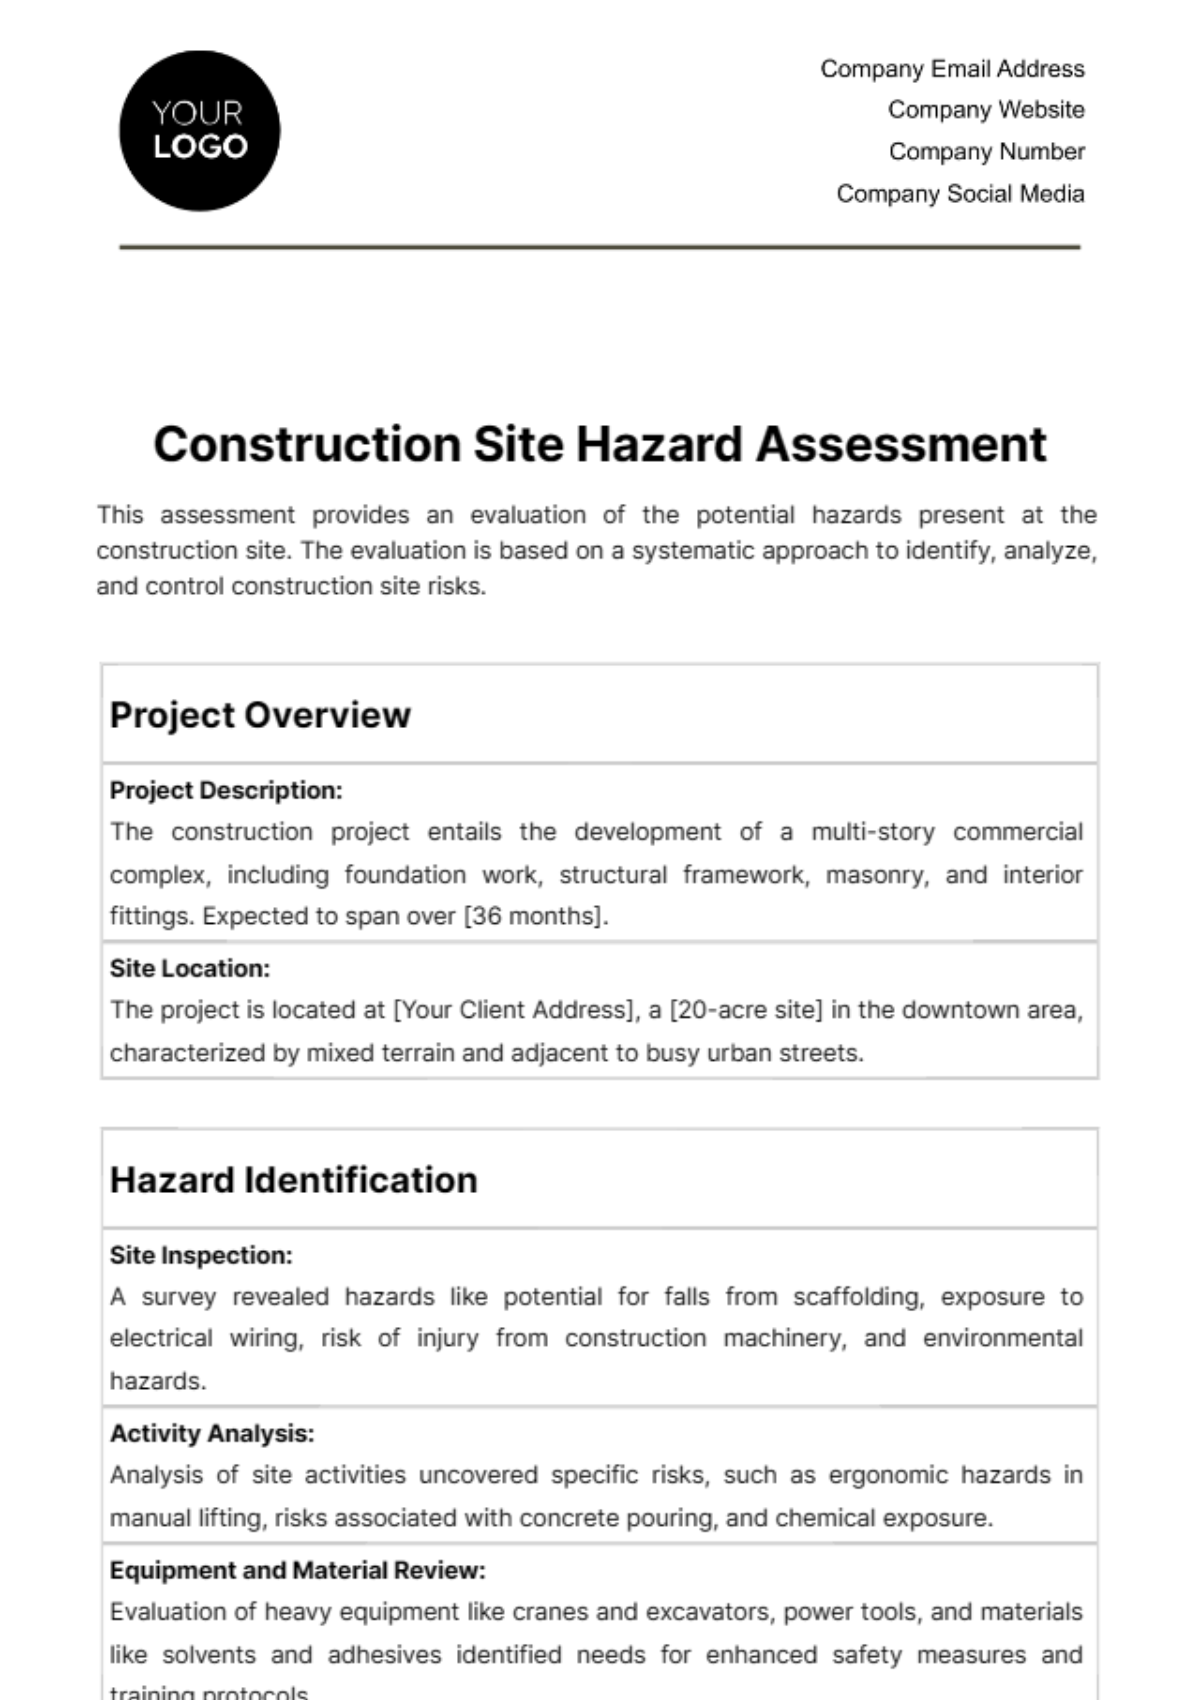 Free Construction Site Hazard Assessment Template